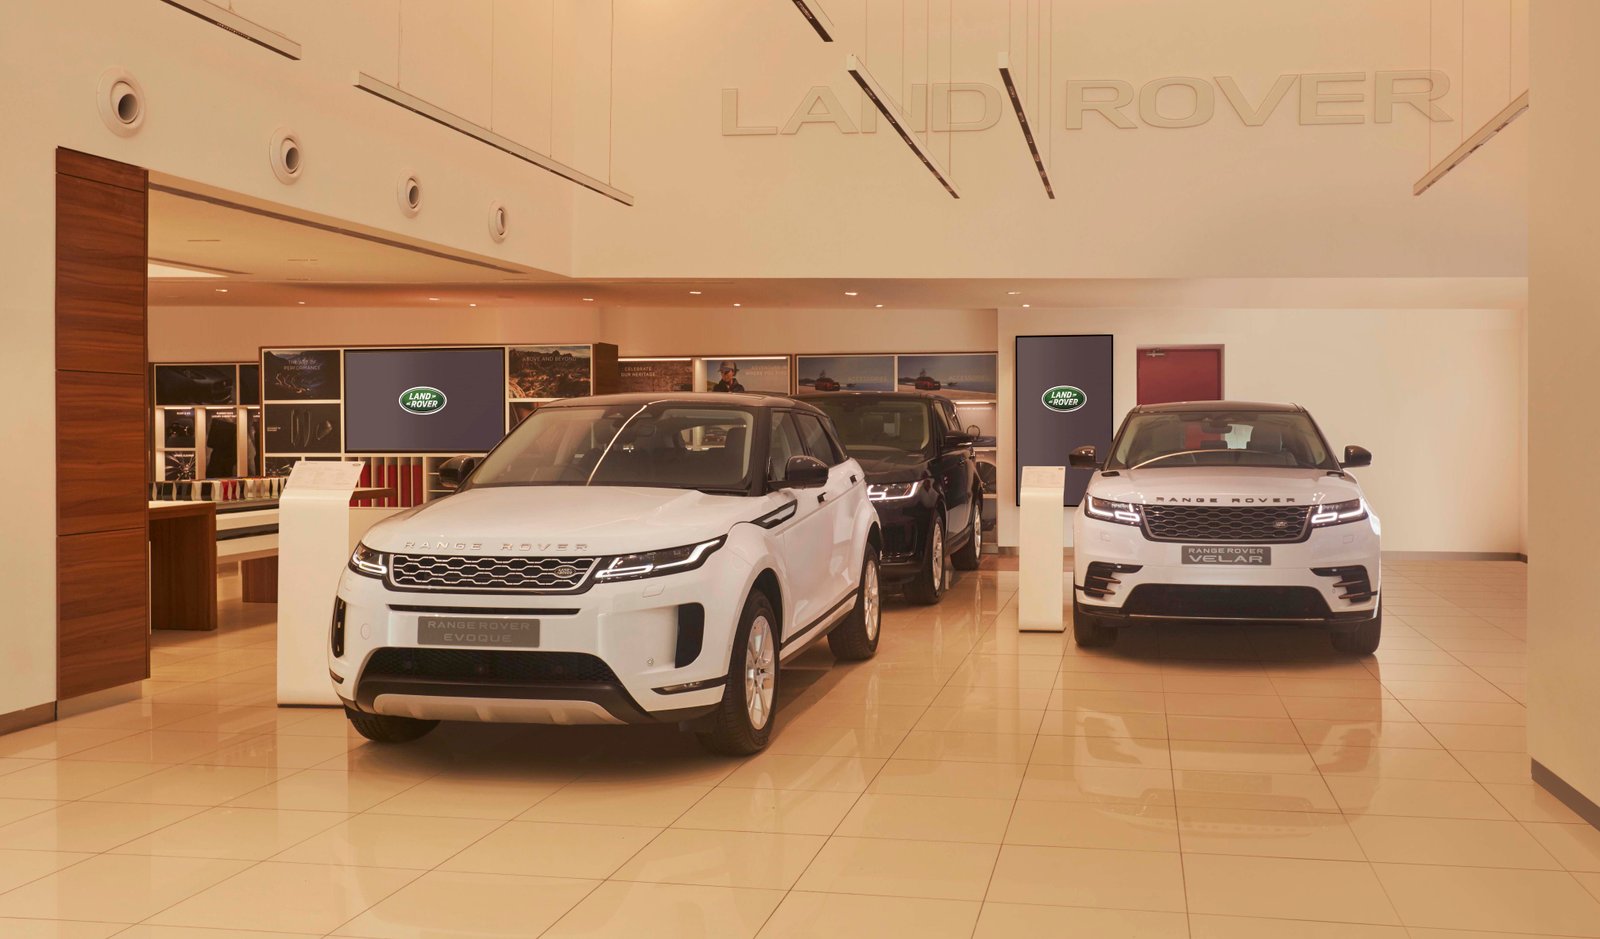 Jaguar Land Rover showroom in Chennai